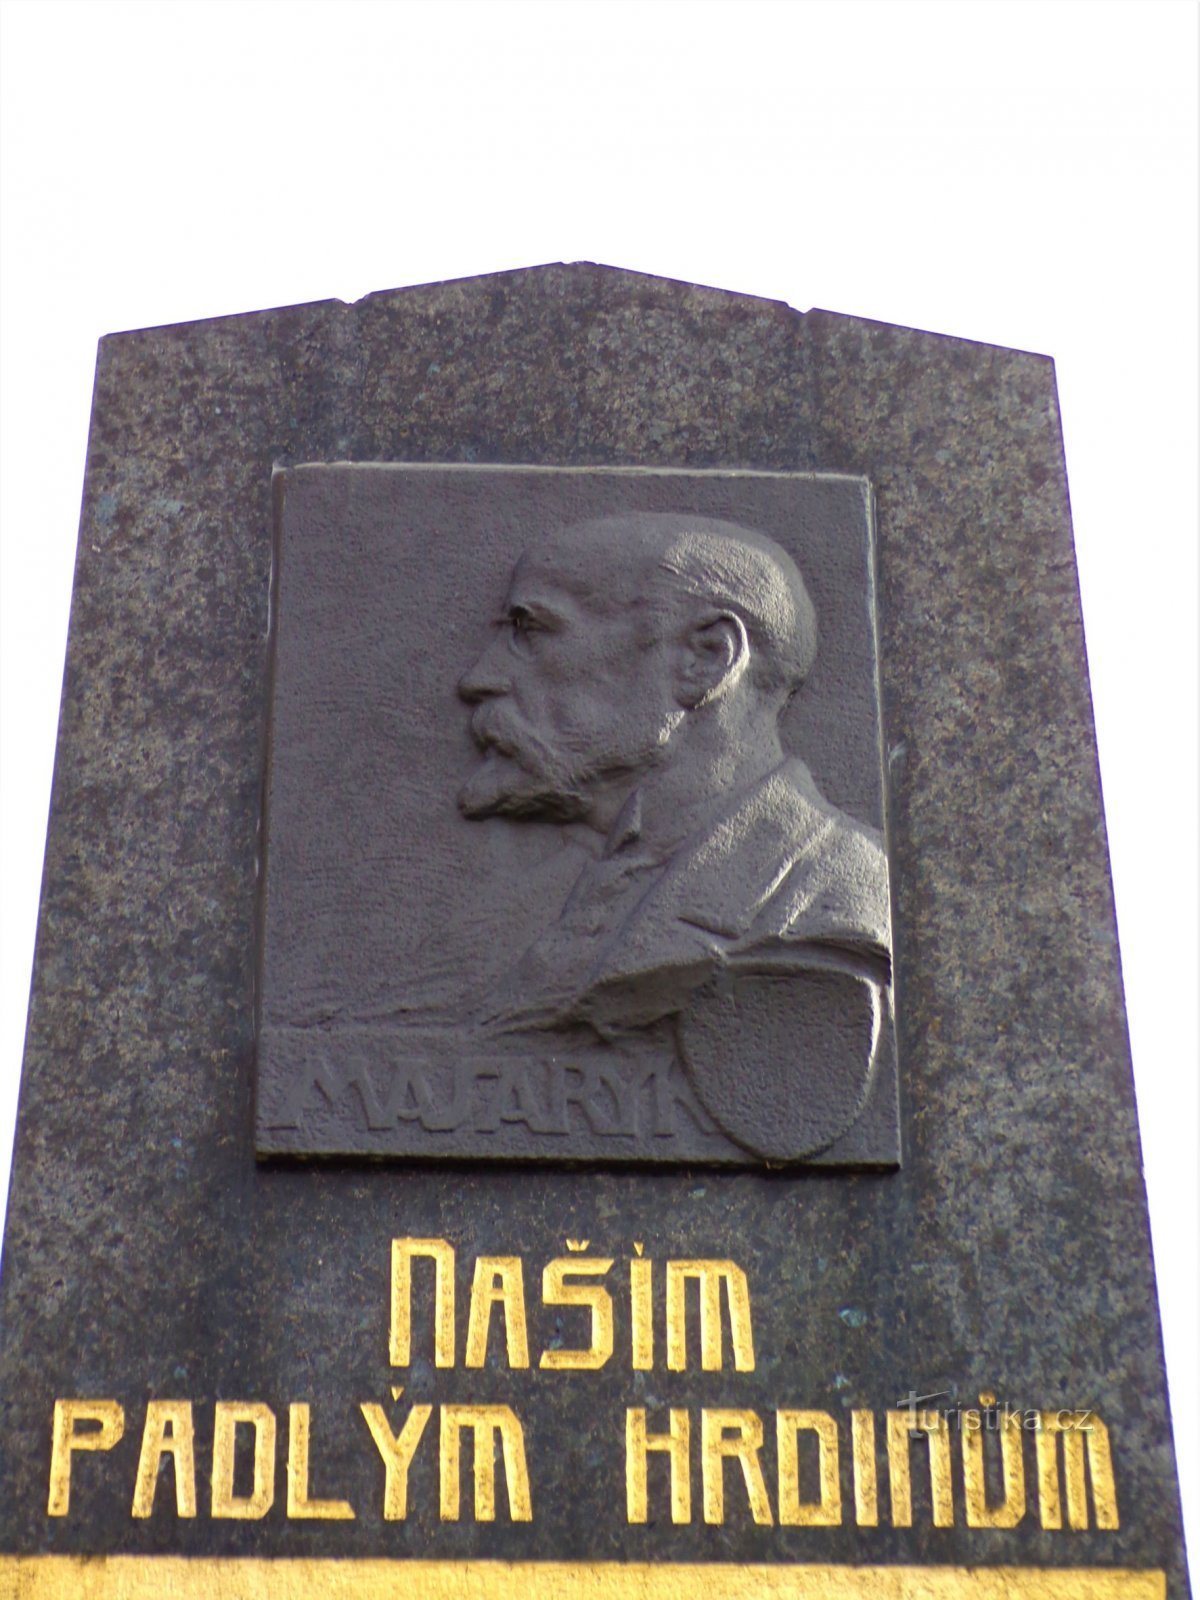 Masaryks relief på monumentet (Suchá, 16.10.2021/XNUMX/XNUMX)